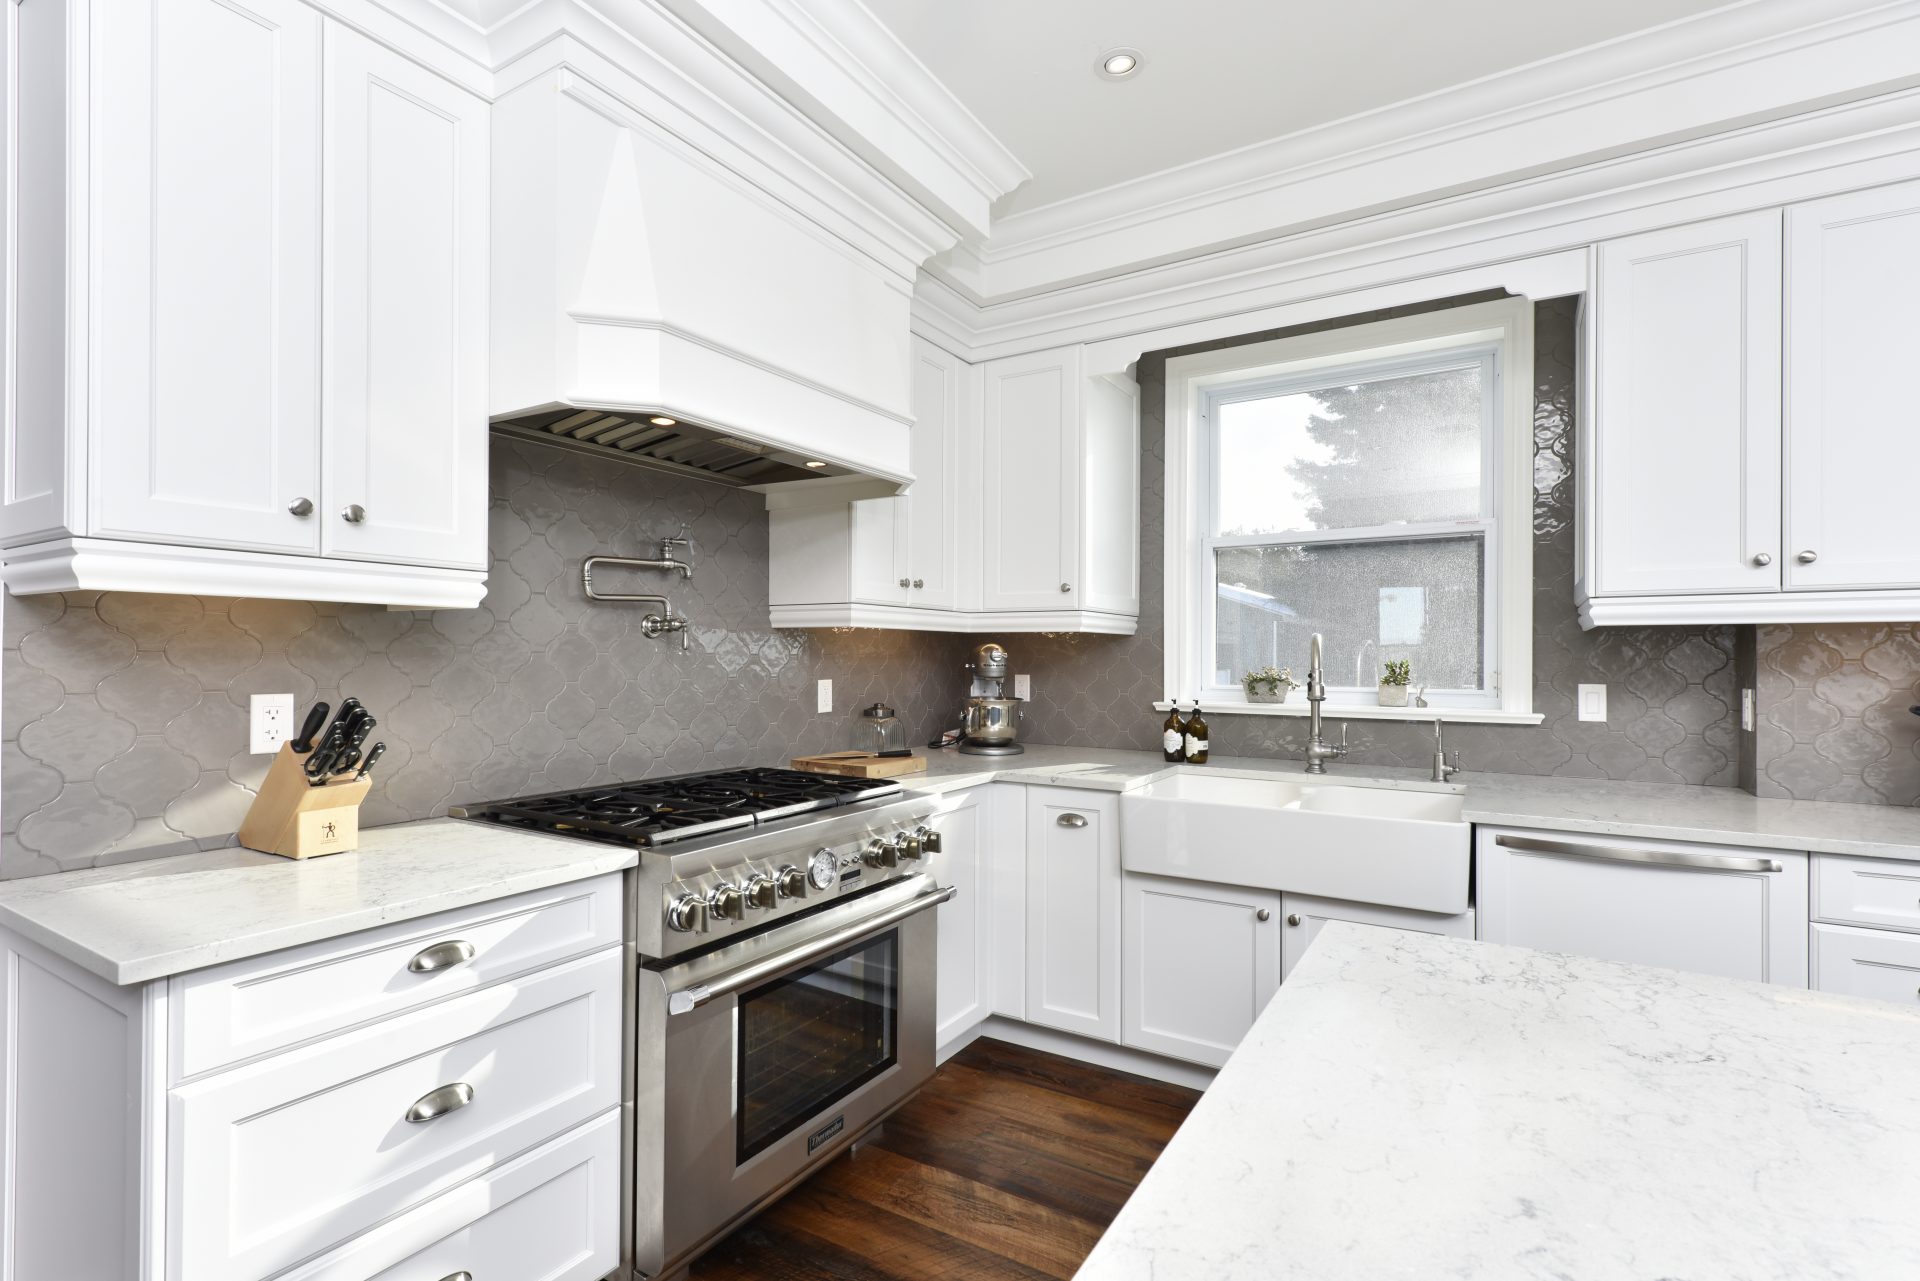 Classic white kitchen with gray tile backsplash